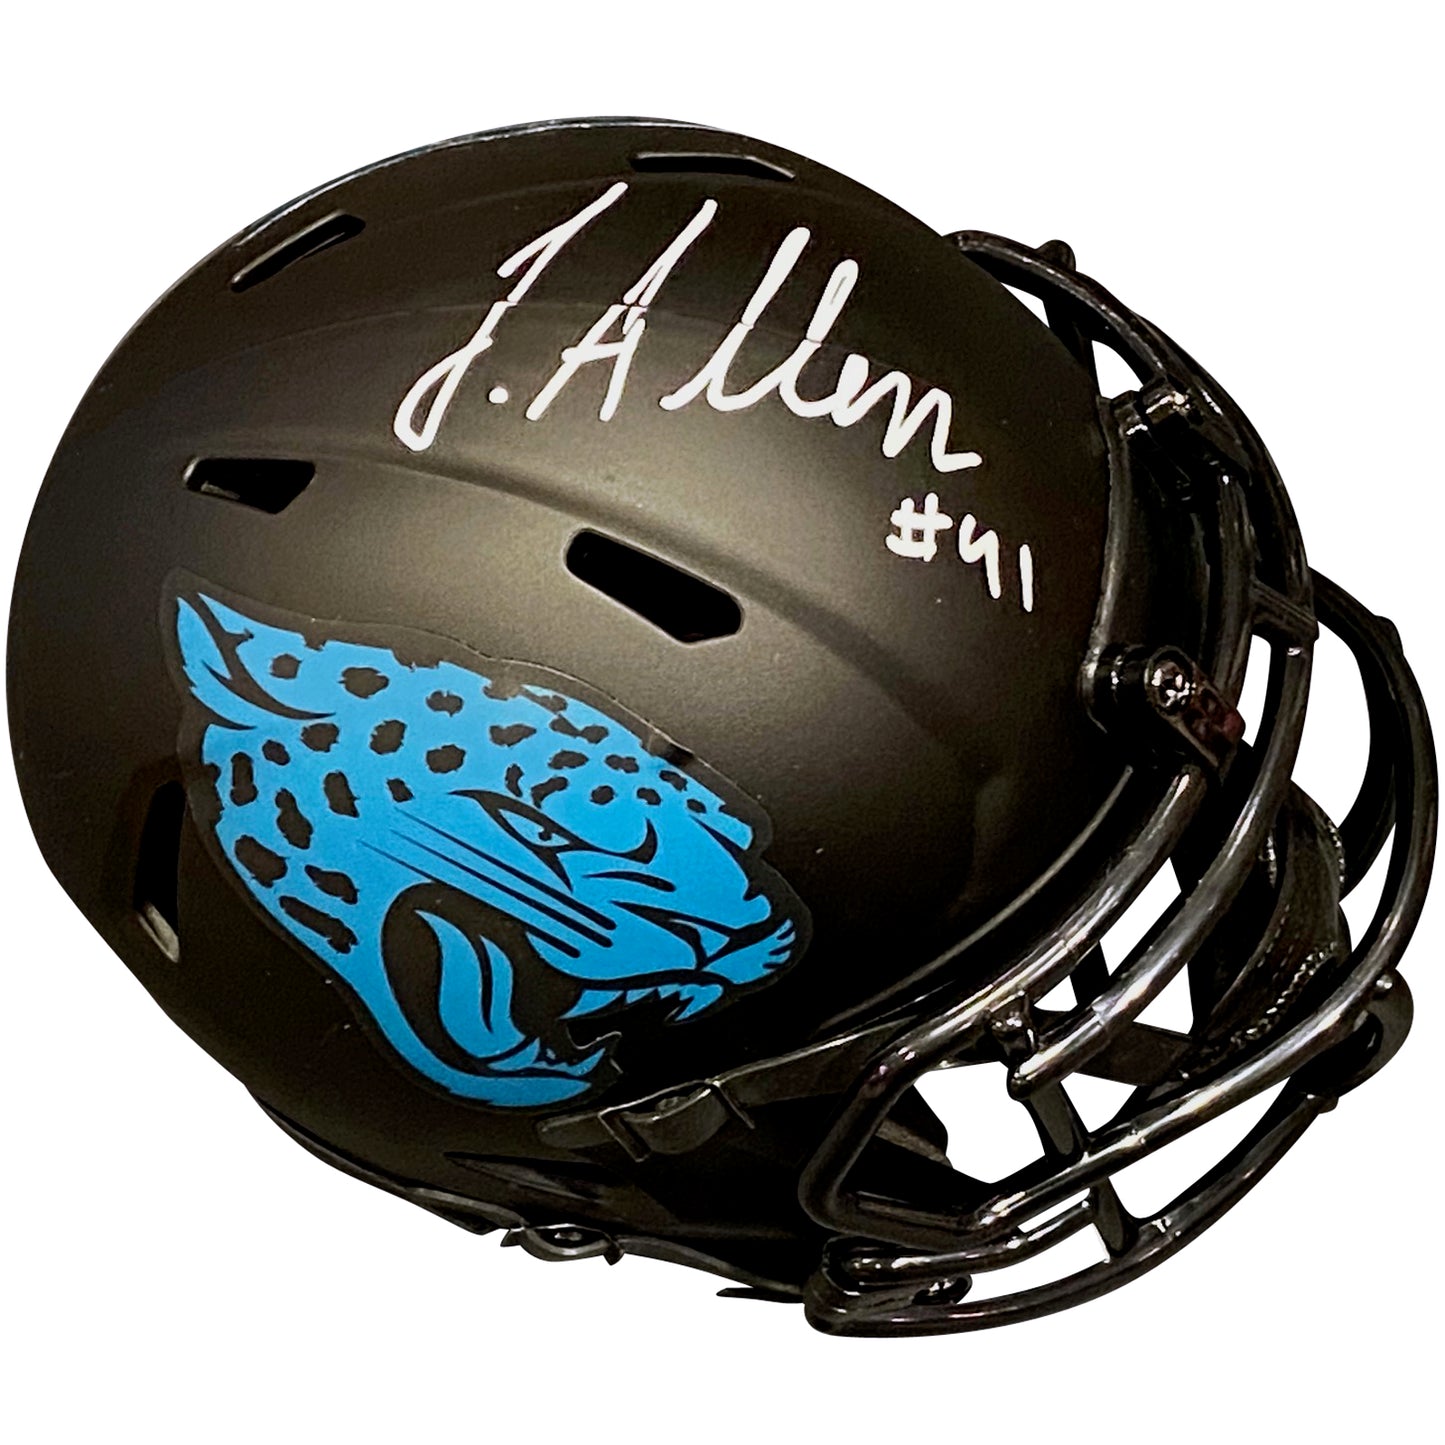 Josh Allen Autographed Jacksonville Jaguars (ECLIPSE Alternate) Mini Helmet